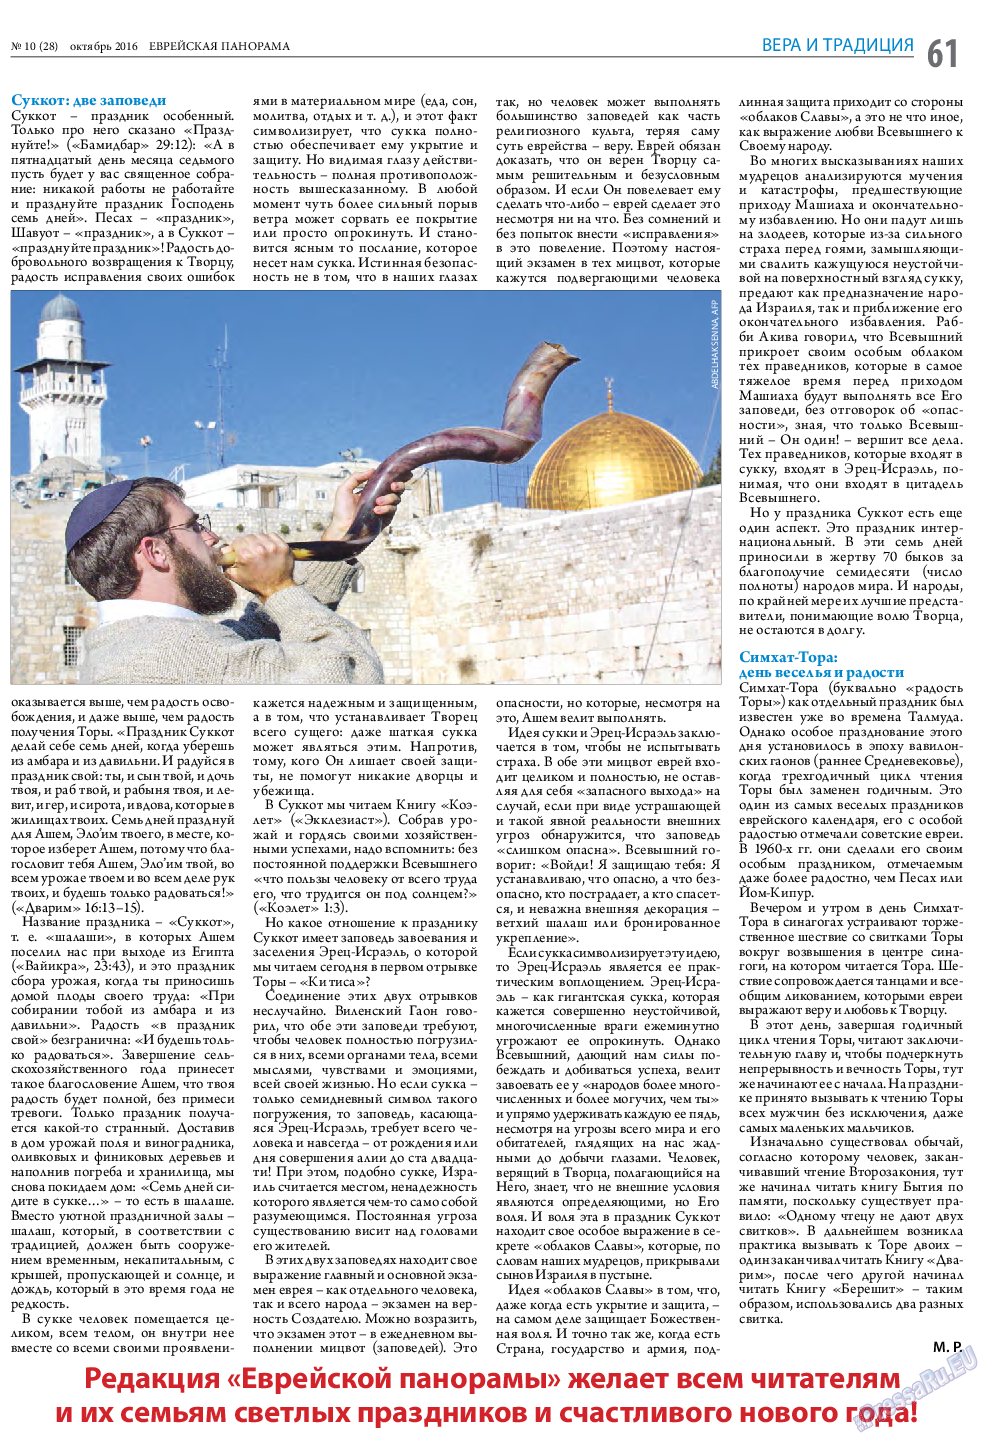 Еврейская панорама, газета. 2016 №10 стр.61